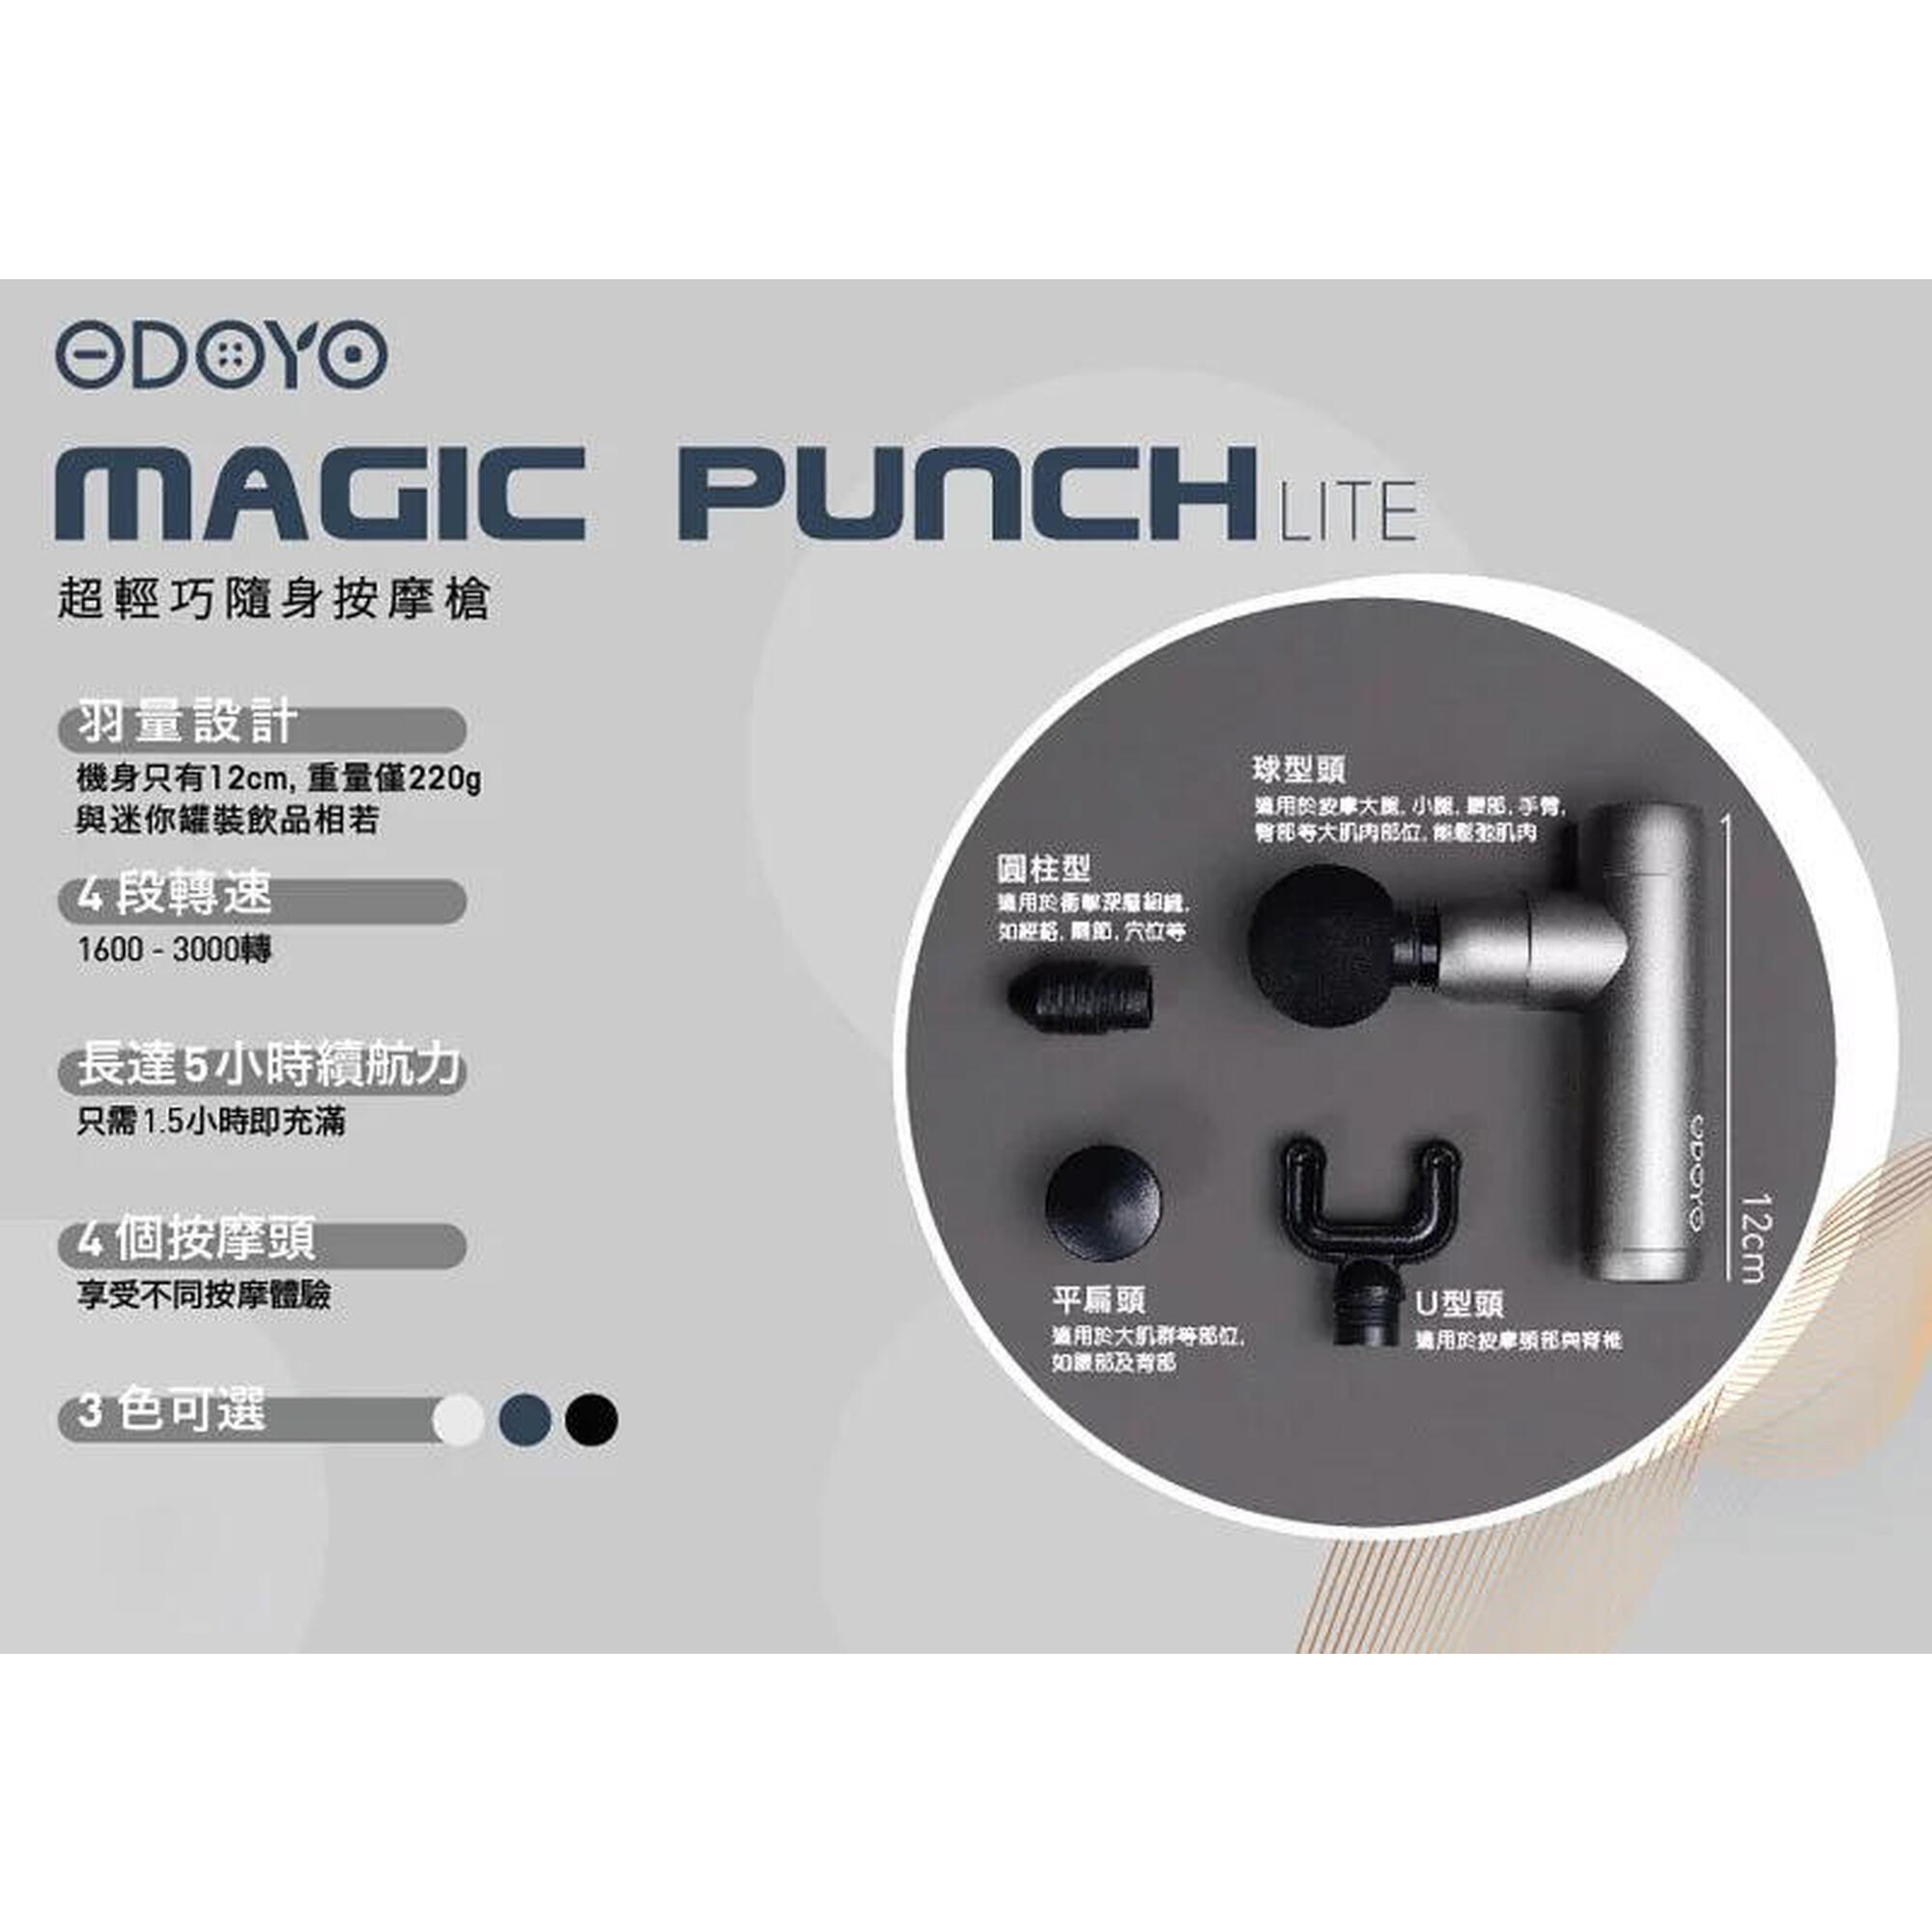 Magic Punch Lite 超輕巧隨身按摩槍 - 黑色